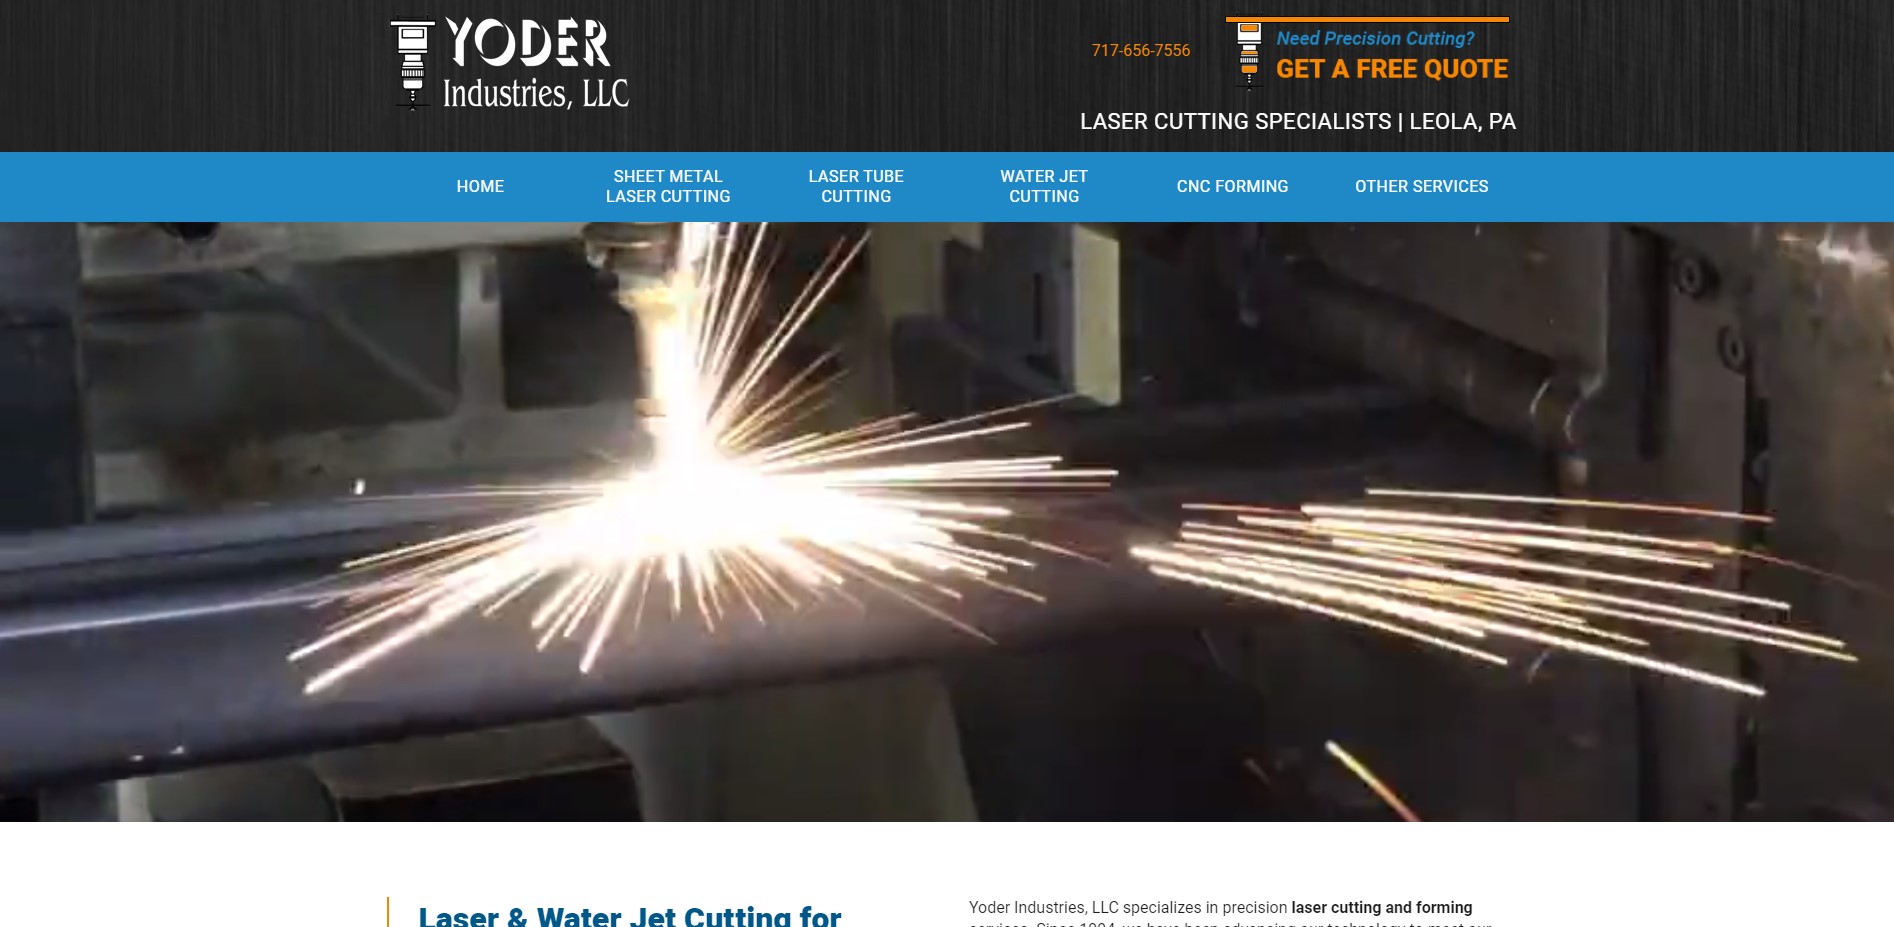 Yoder Industries, LLC